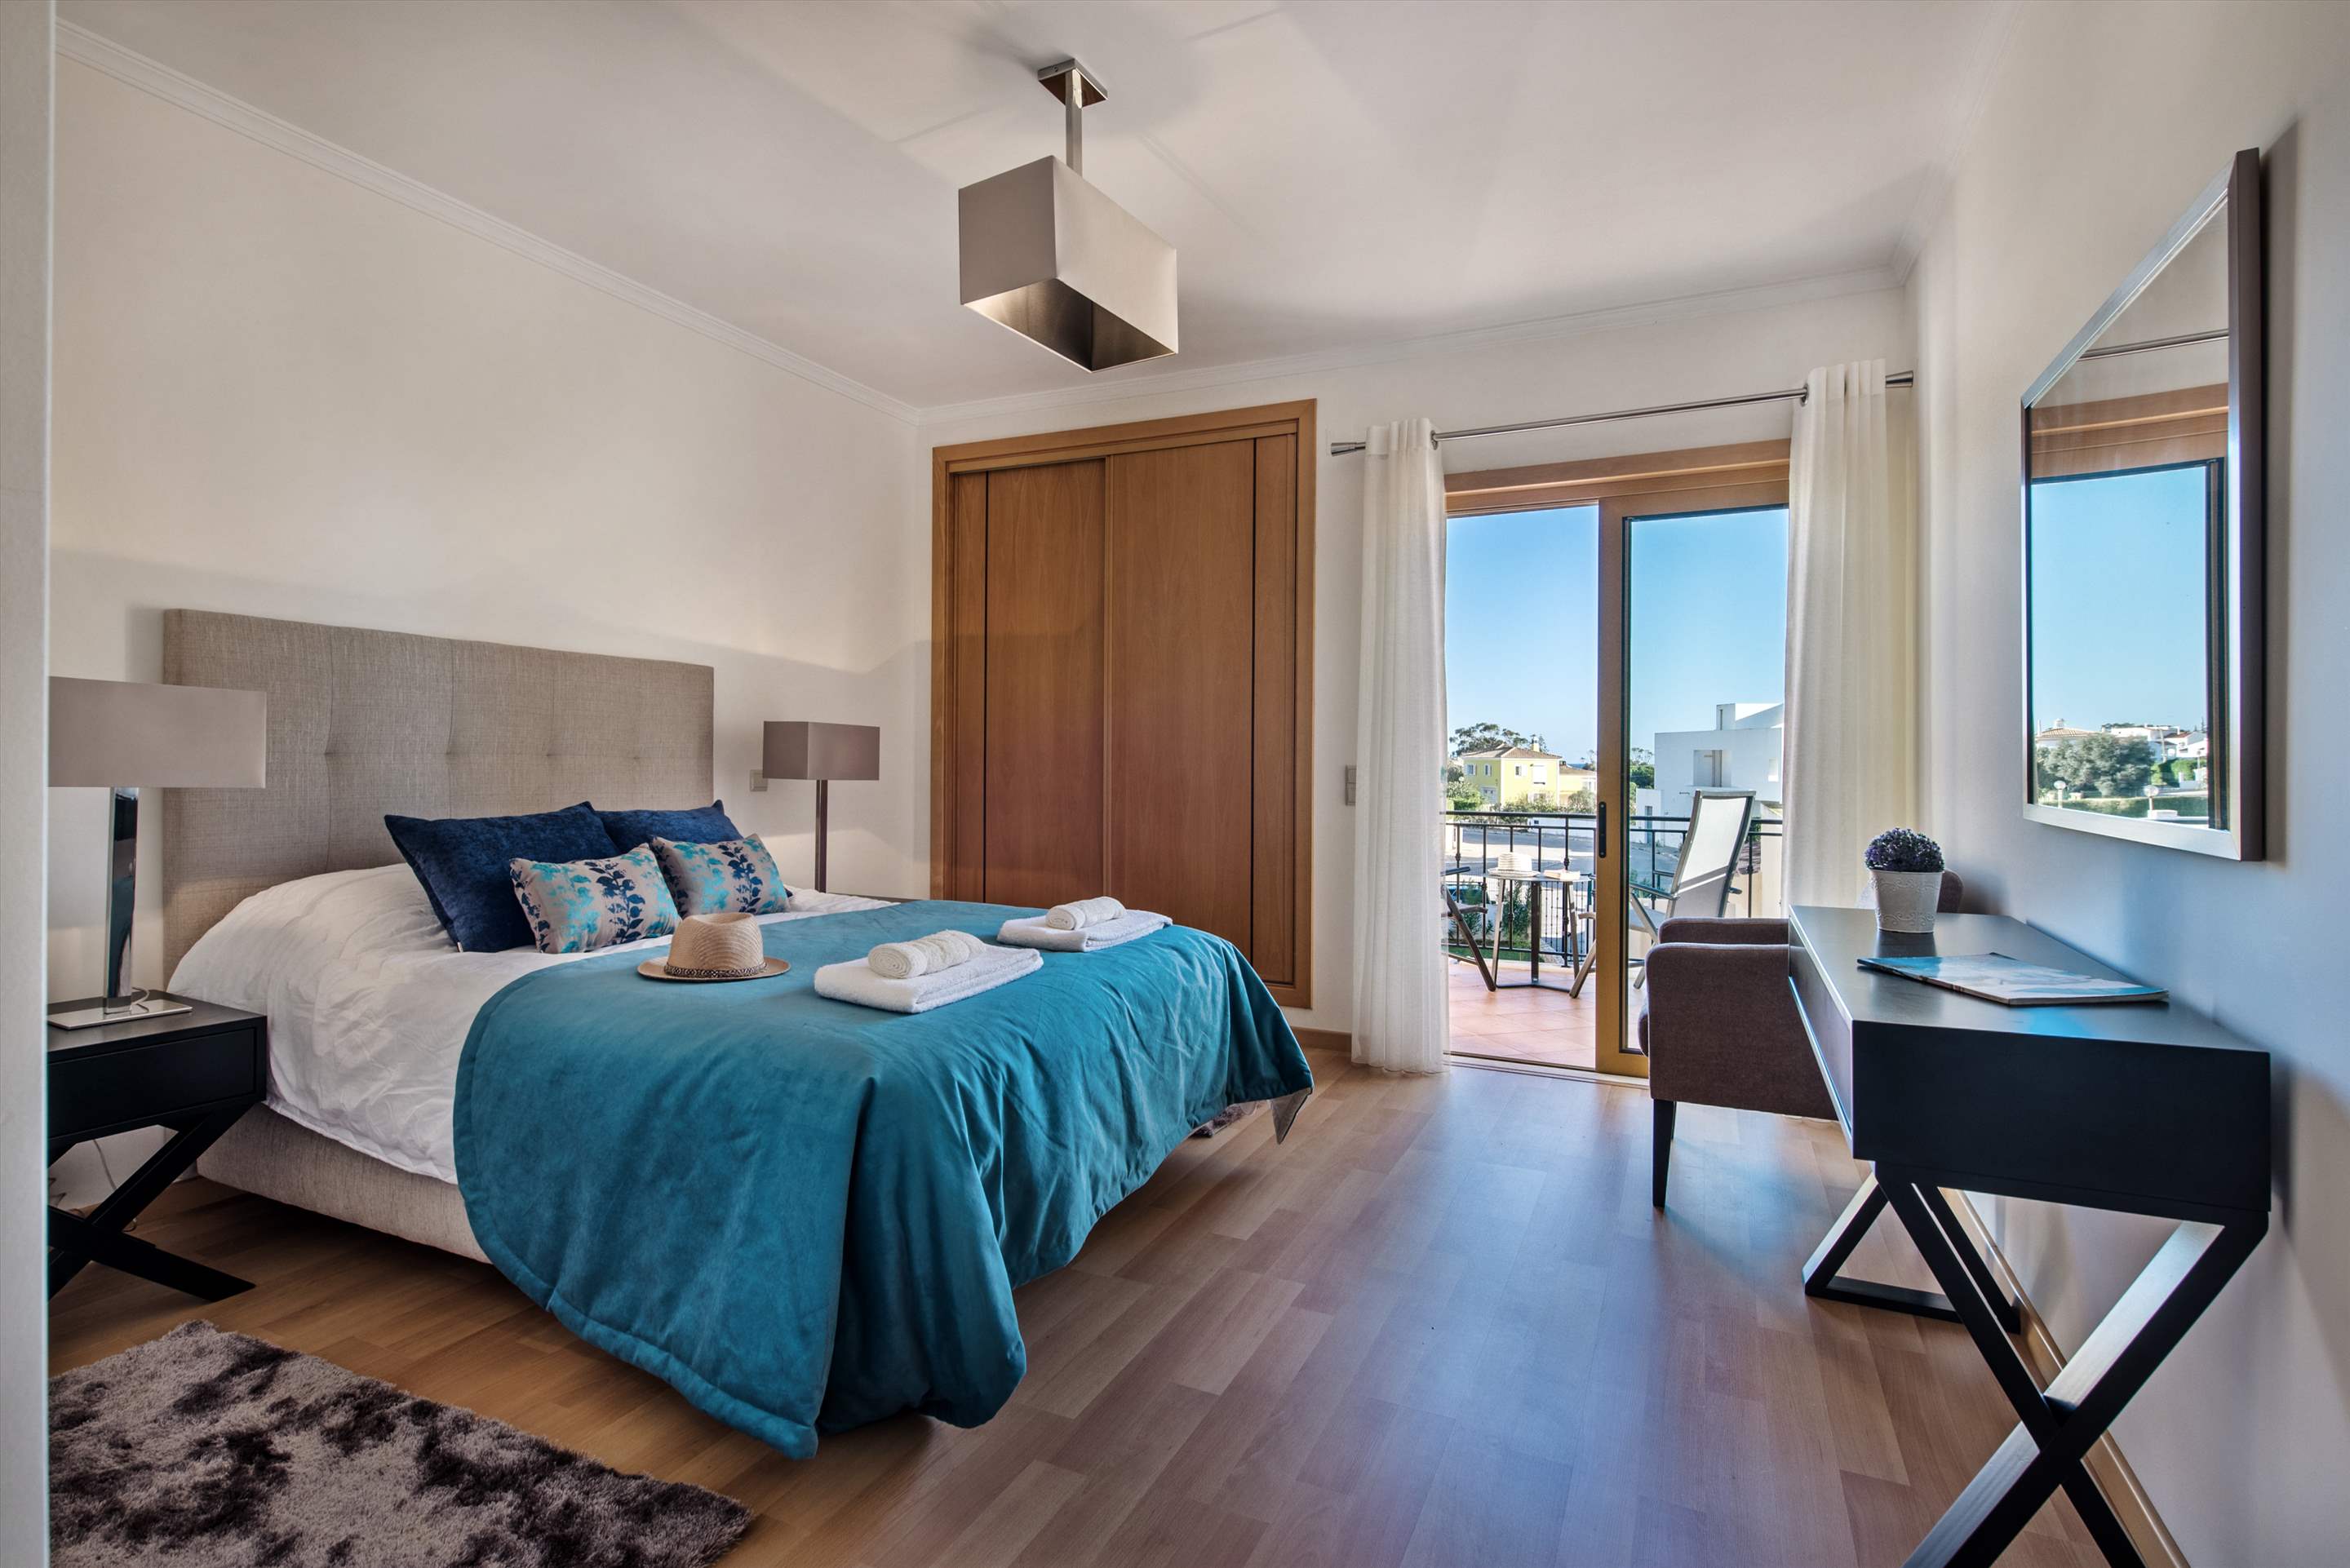 Townhouse Rosal 'D', 2 bedroom villa in Gale, Vale da Parra and Guia, Algarve Photo #15